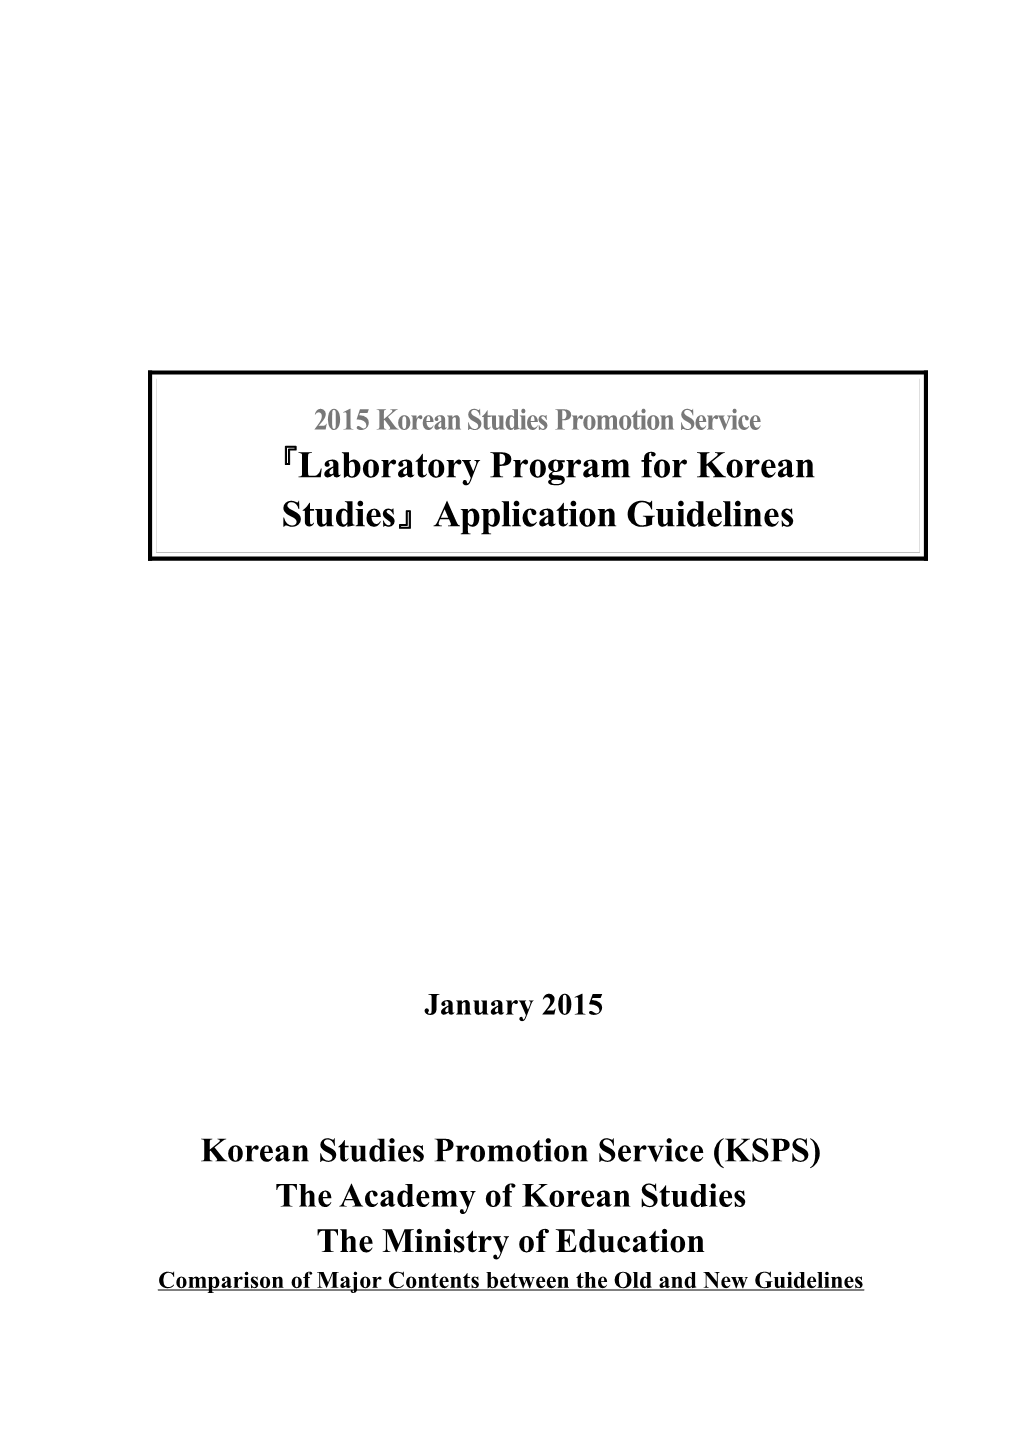 Korean Studies Promotion Service (KSPS)